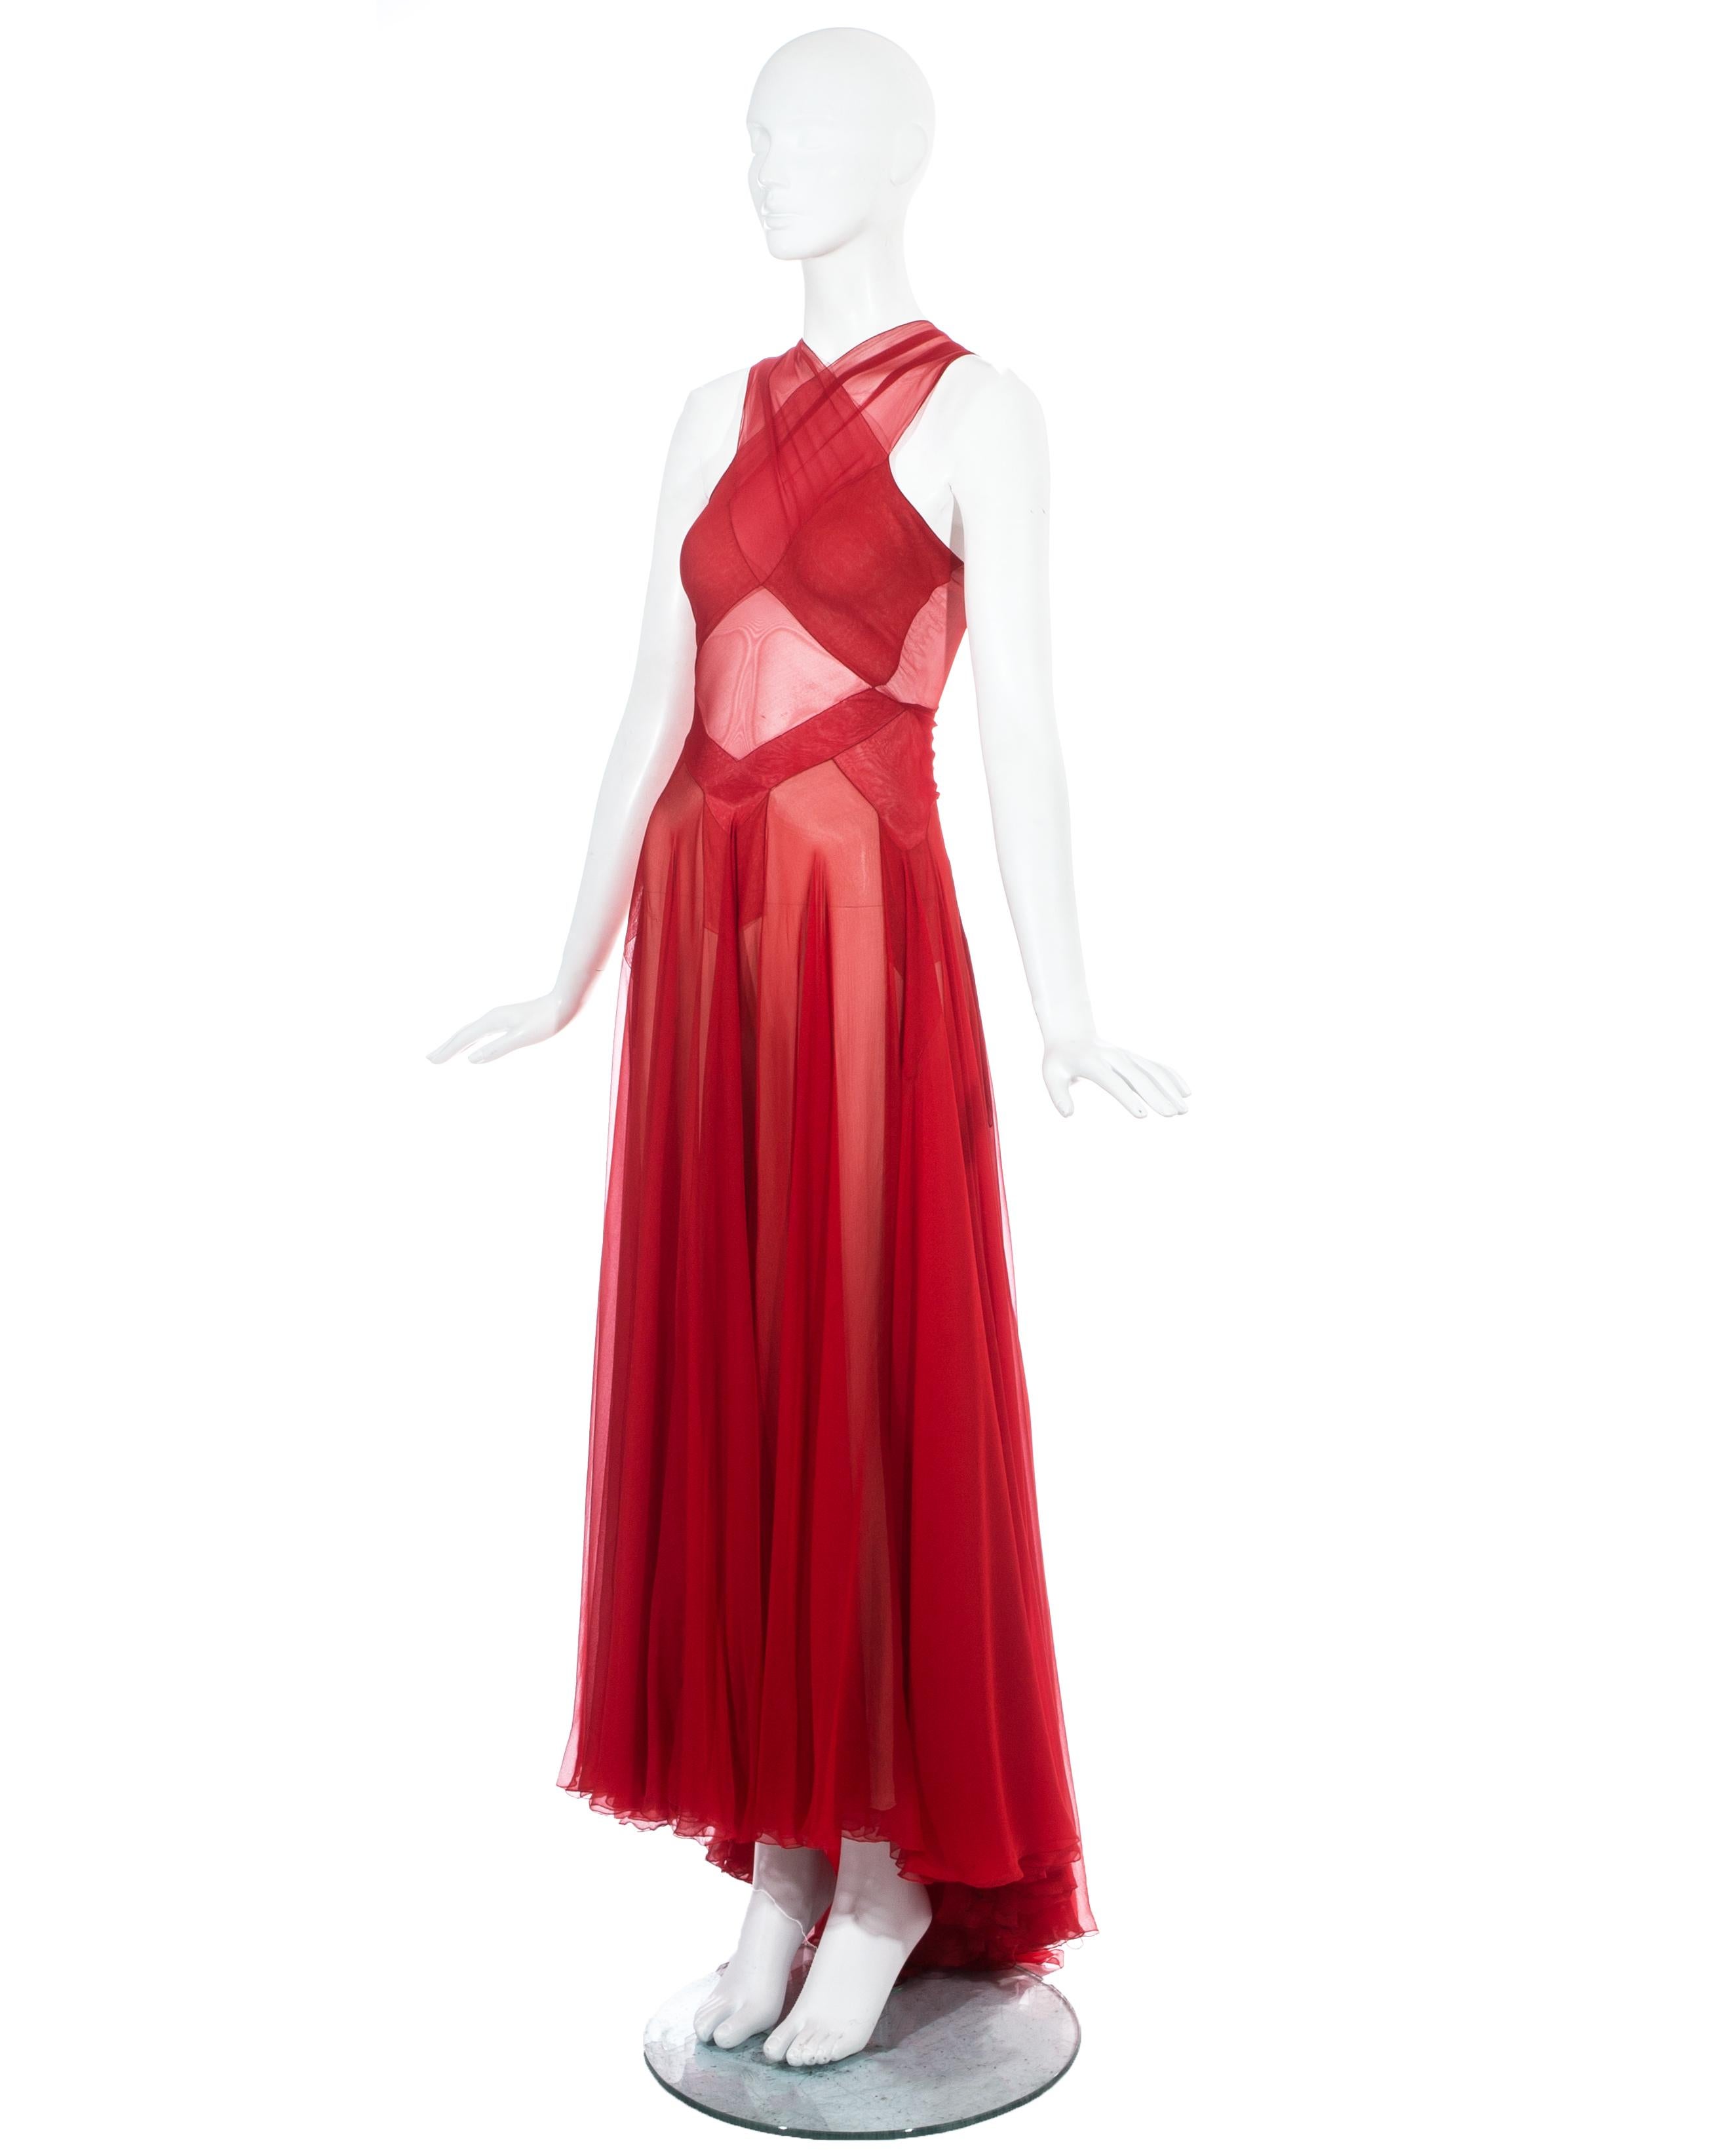 Women's Azzedine Alaia Couture red silk evening dress, c. 1996